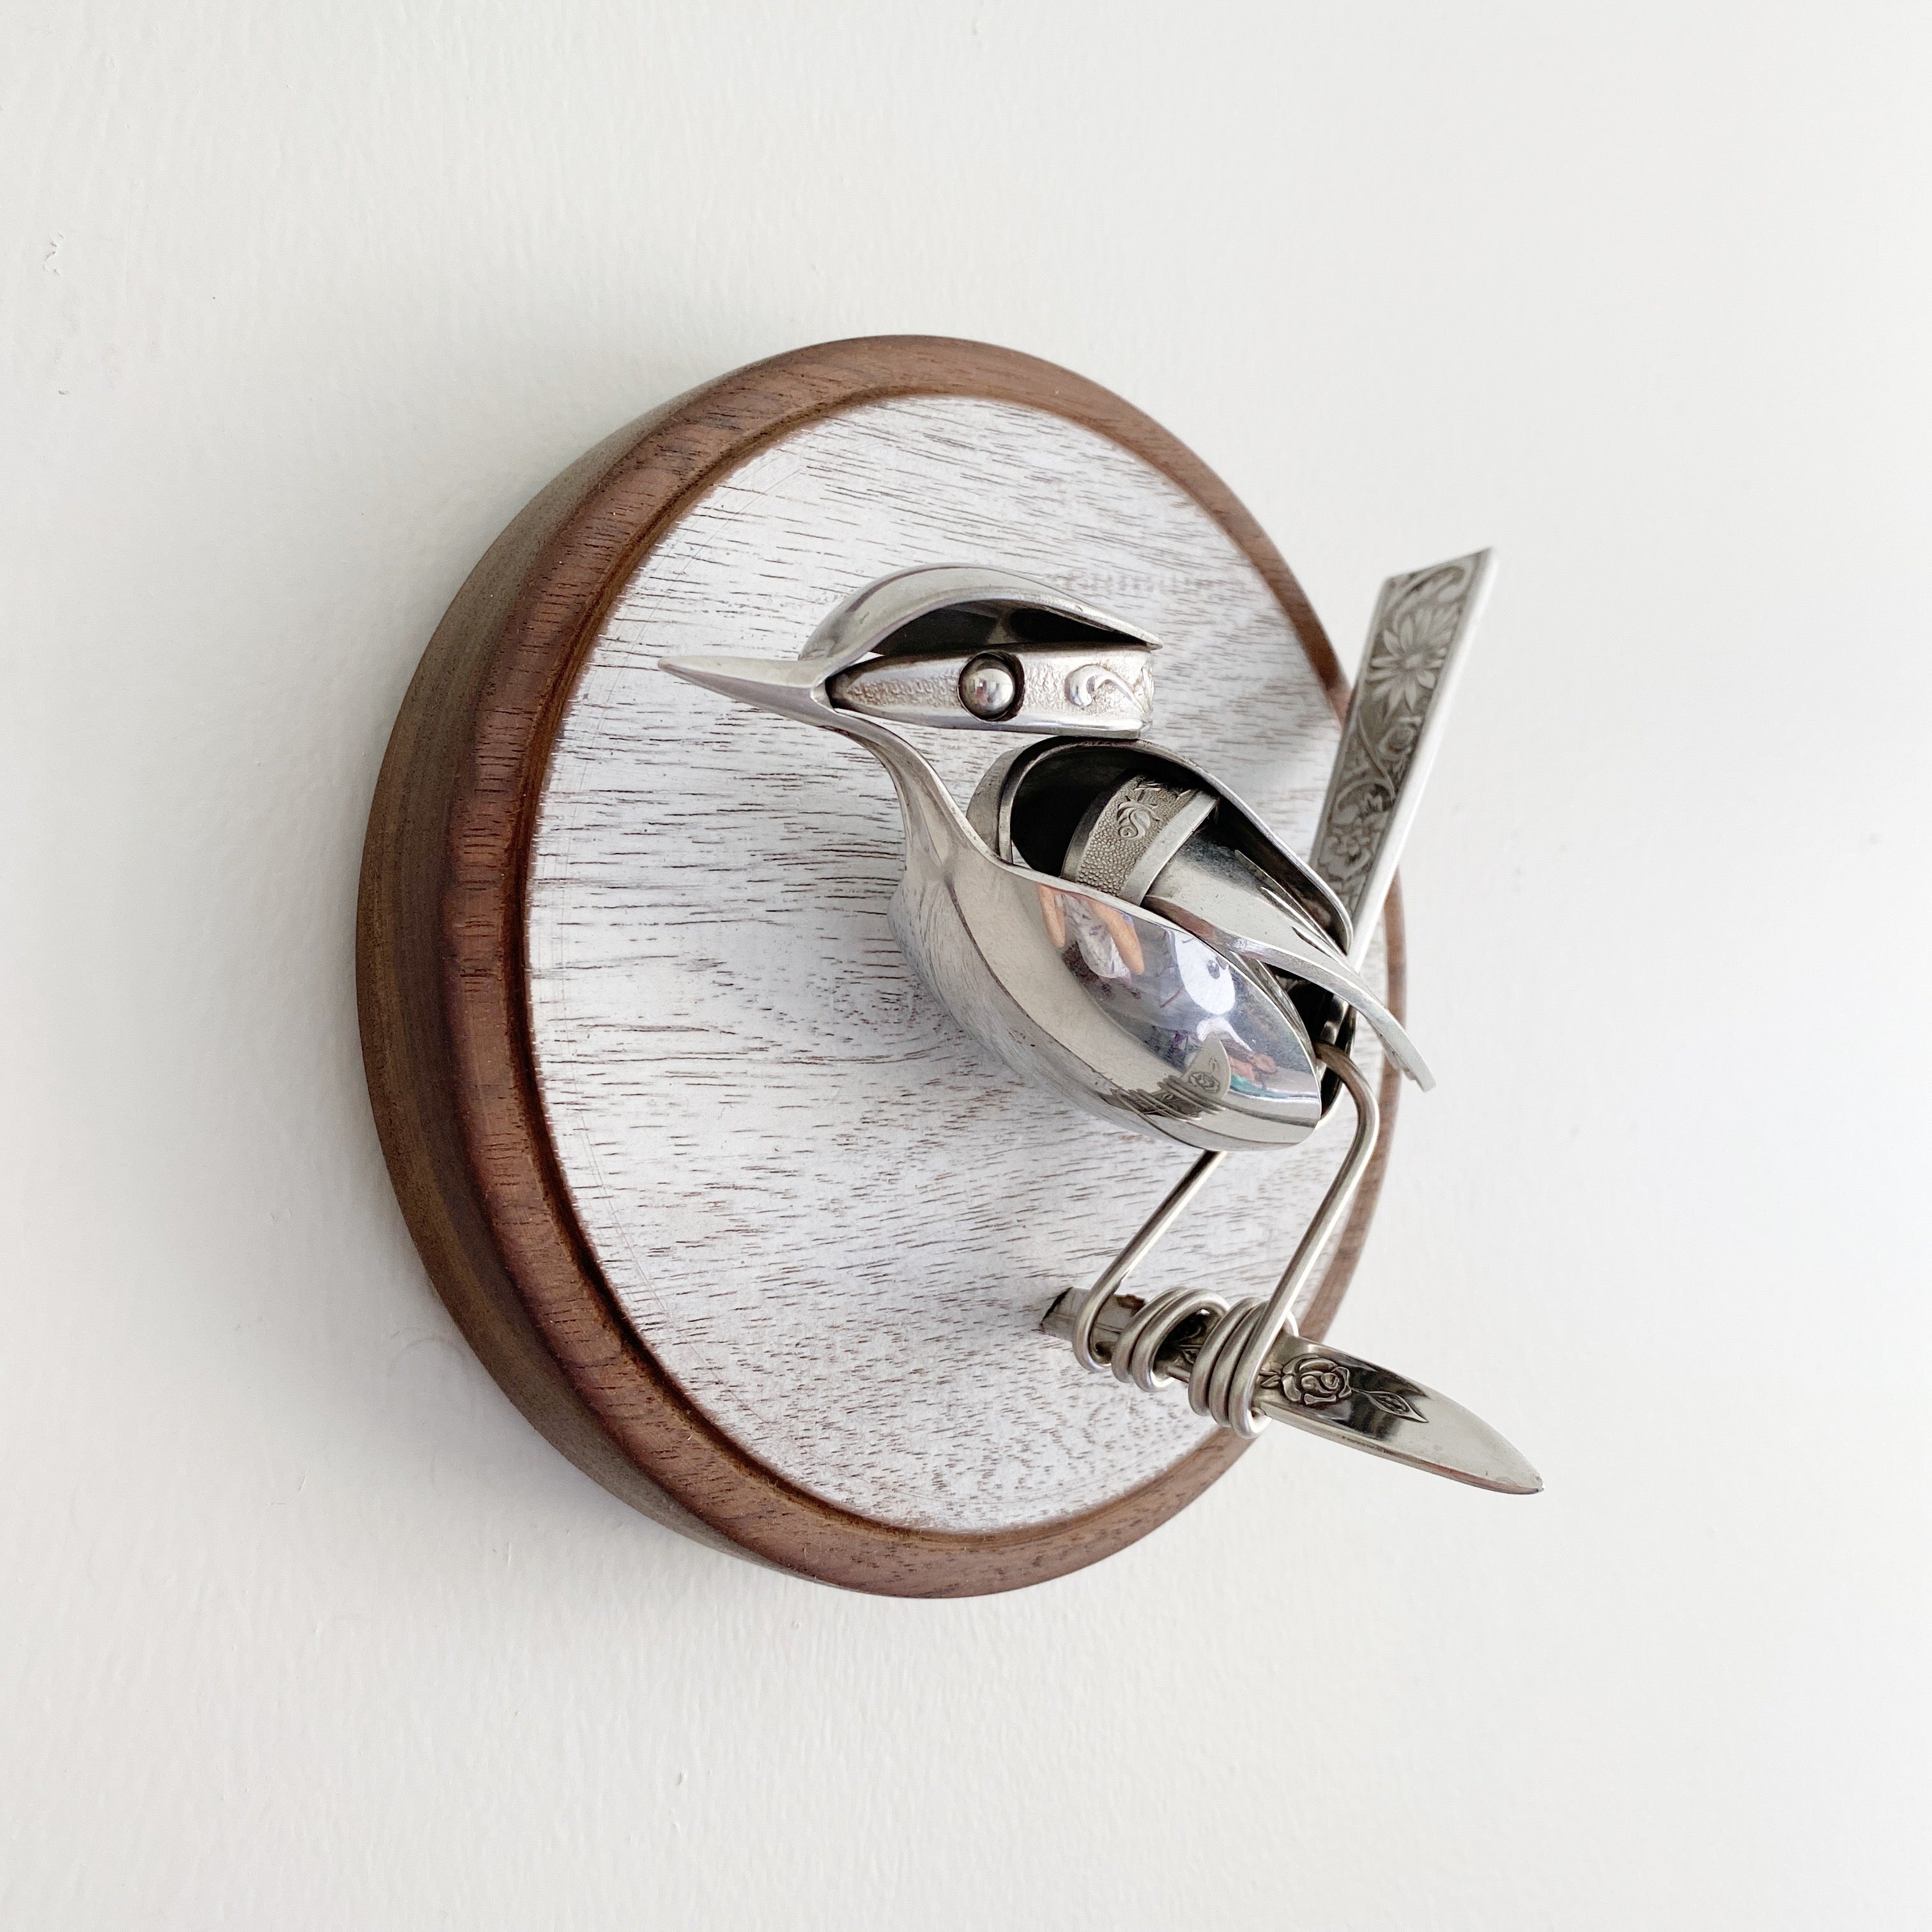 "Giuseppe" - Upcycled Metal Bird Sculpture